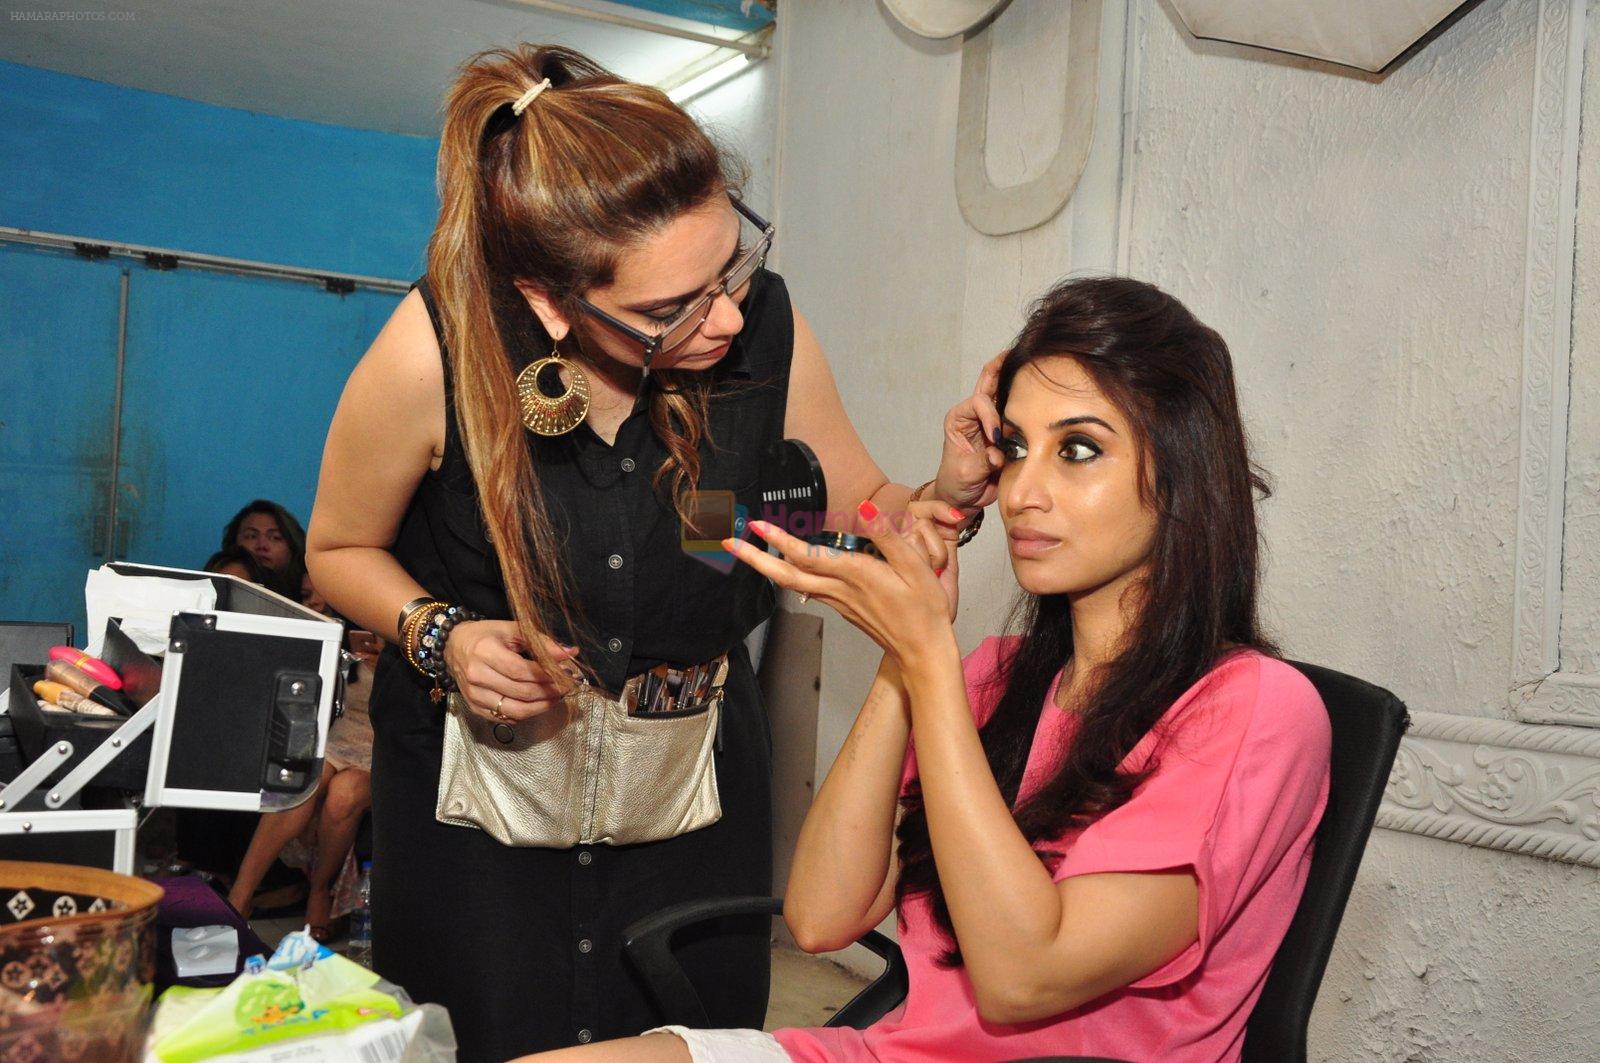 Marathi film actor Smita Gondkar with makeup artist Pinky Asnani during the monsoon make-up at PAMs salon, in Mumbai, India on June 24, 2016